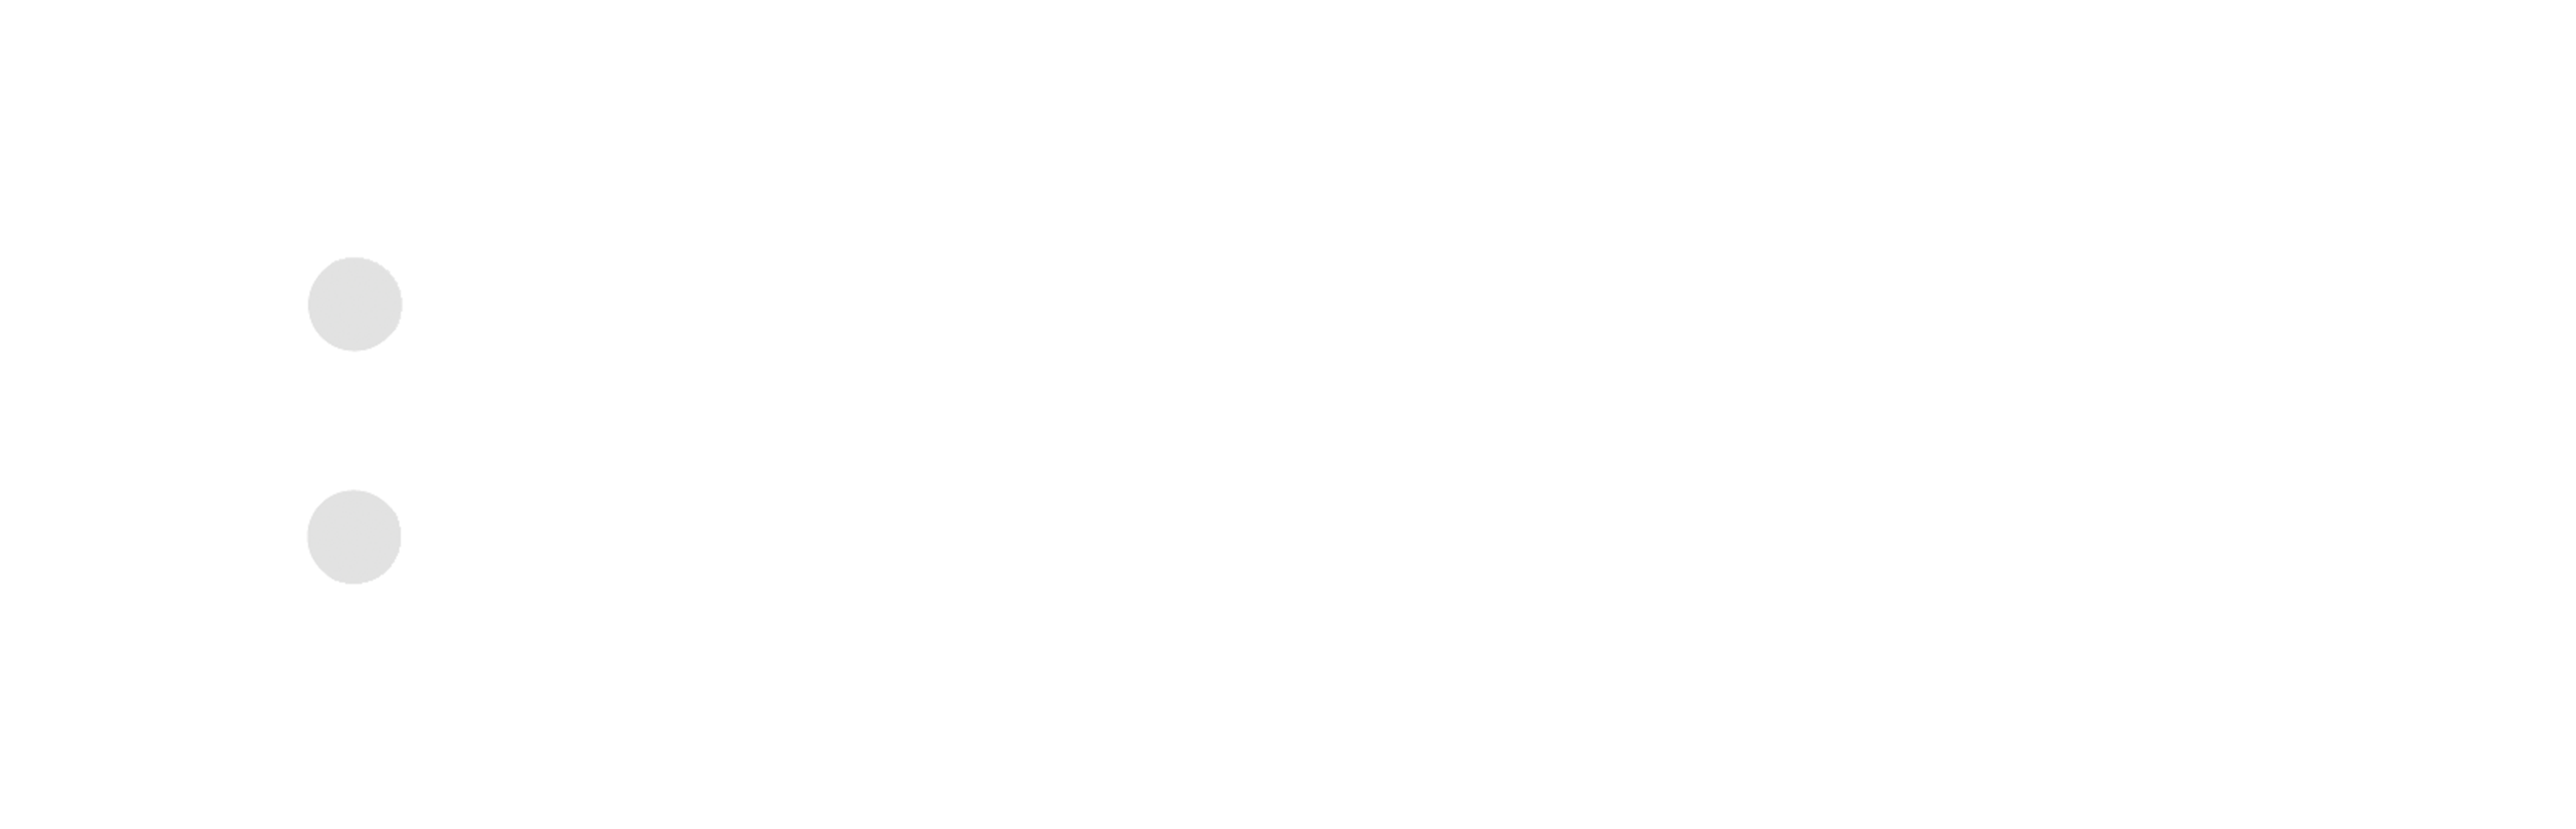 https://www.saastock.com/wp-content/uploads/2021/08/Contentful-logo.png